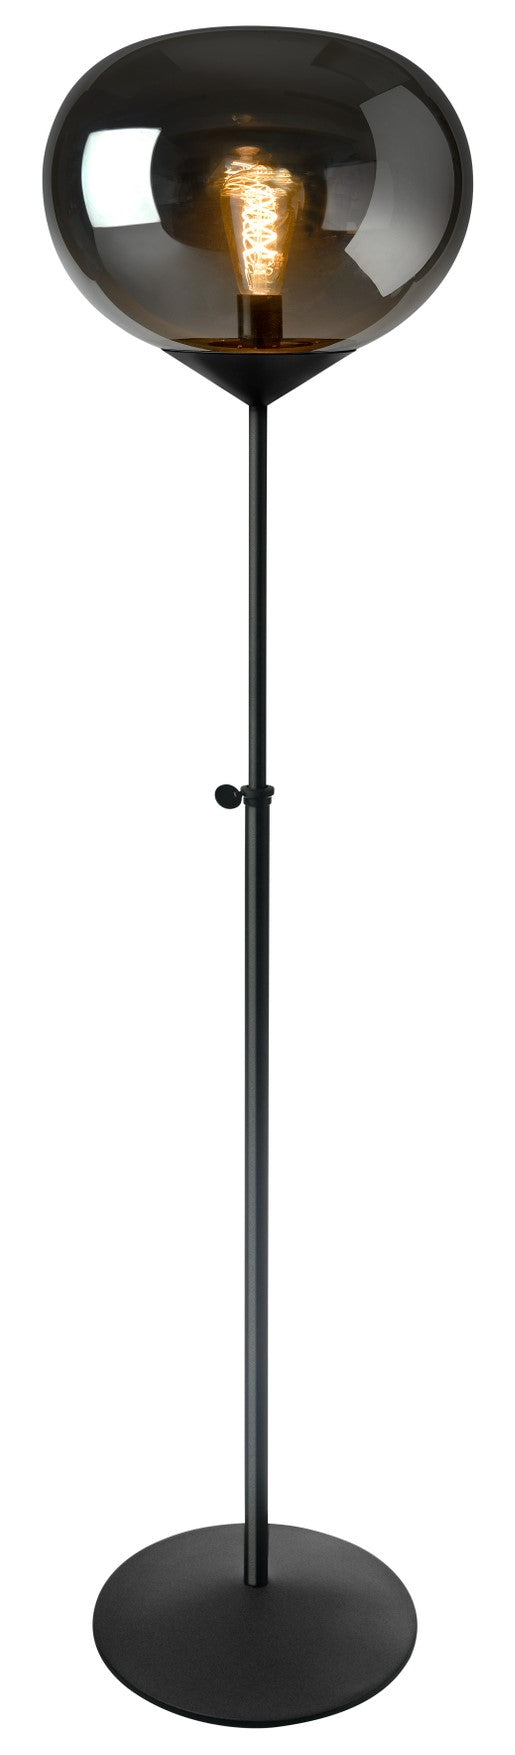 Sompex floor lamp drop 116-164cm